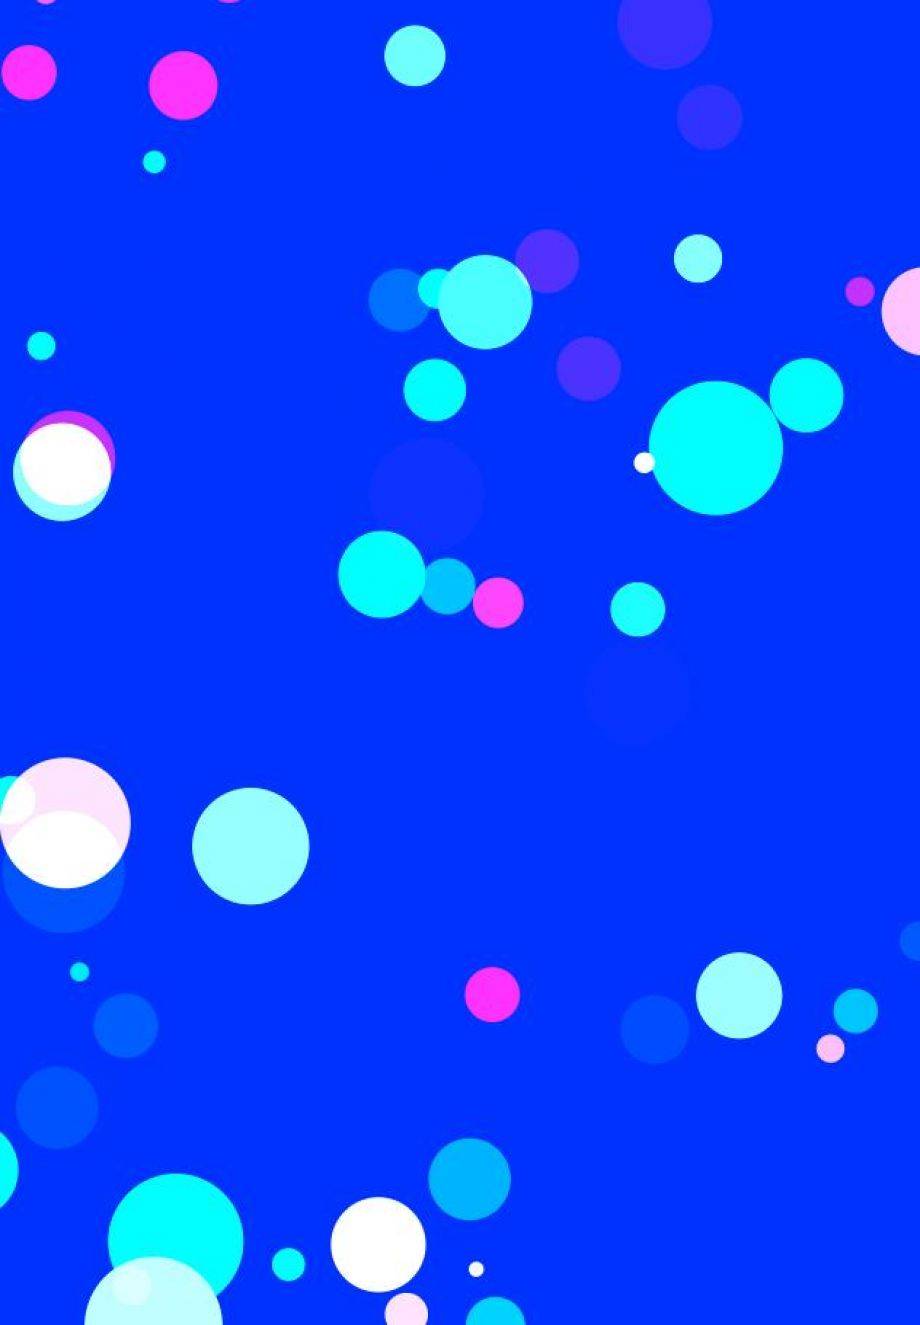 HTML5canvas鼠标划破随机生成的悬浮泡沫动画特效